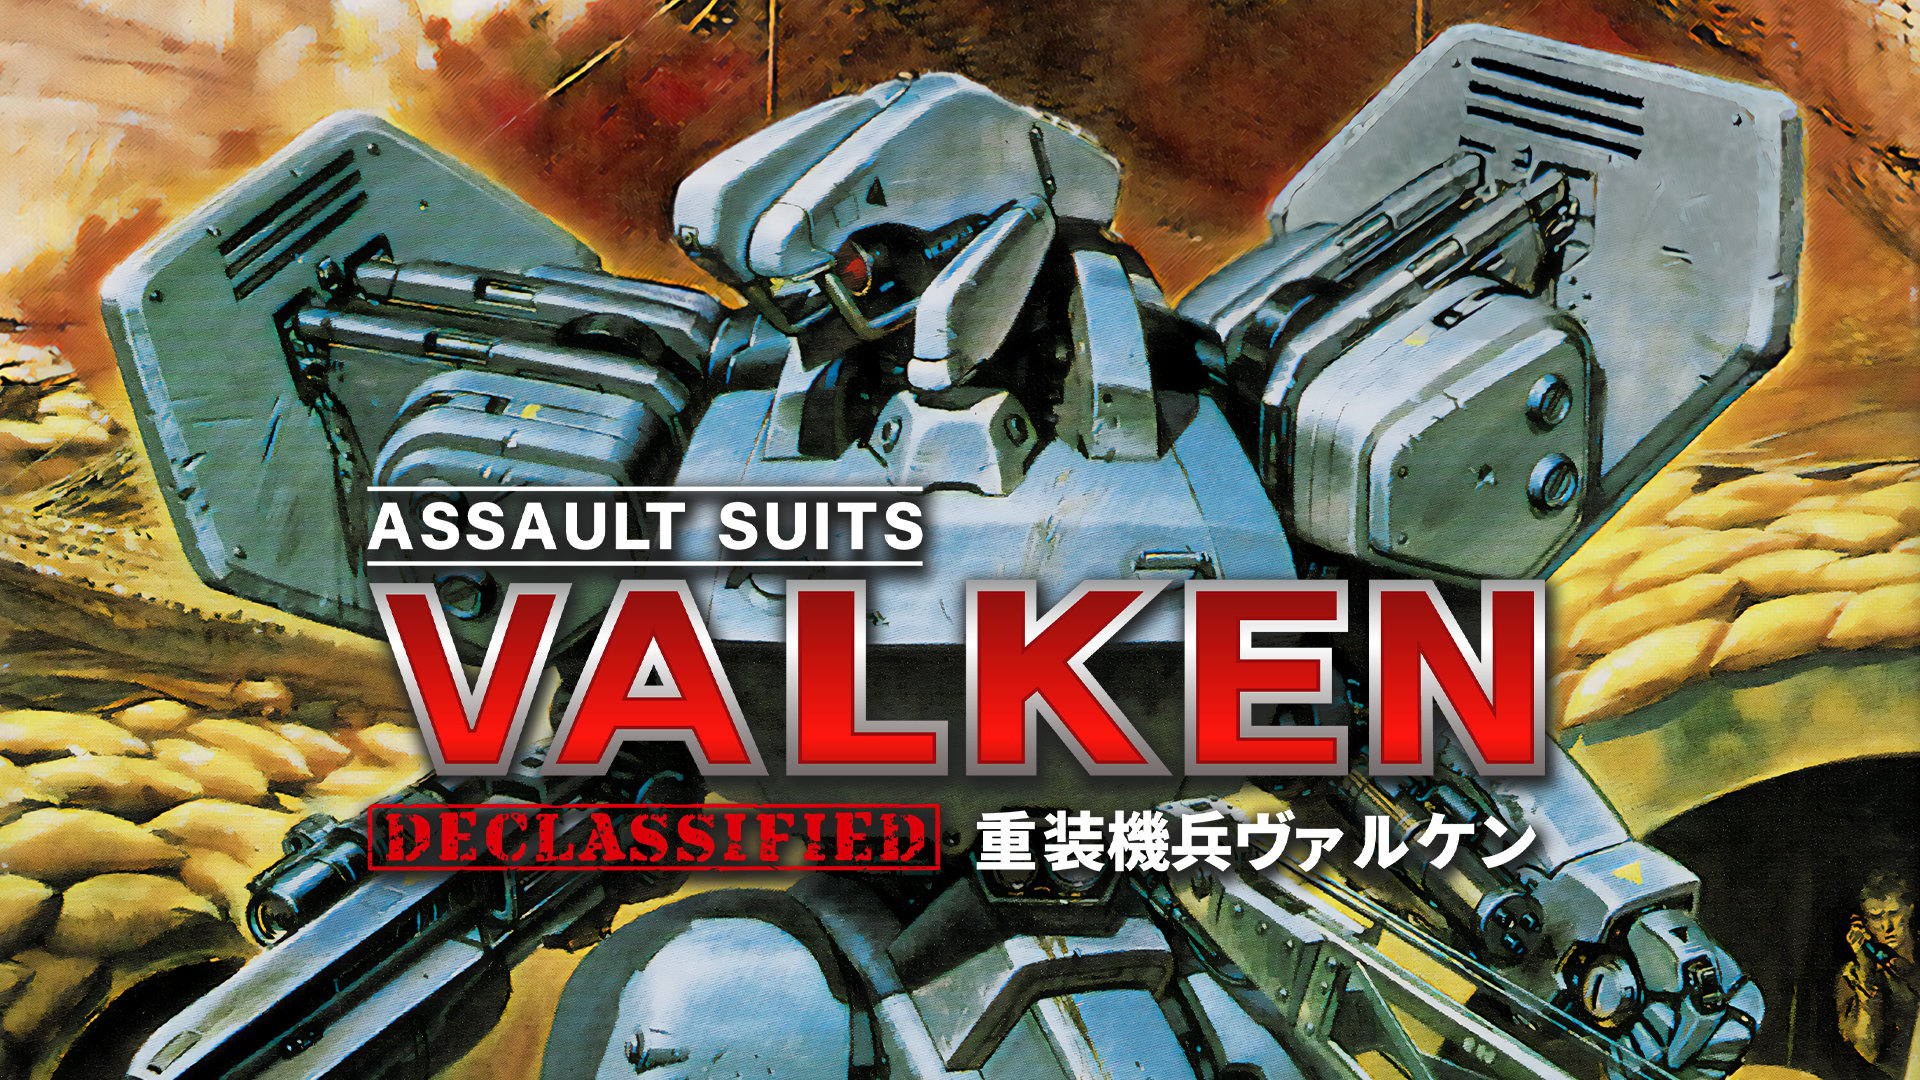 Assault Suits Valken Declassified announced for Switch